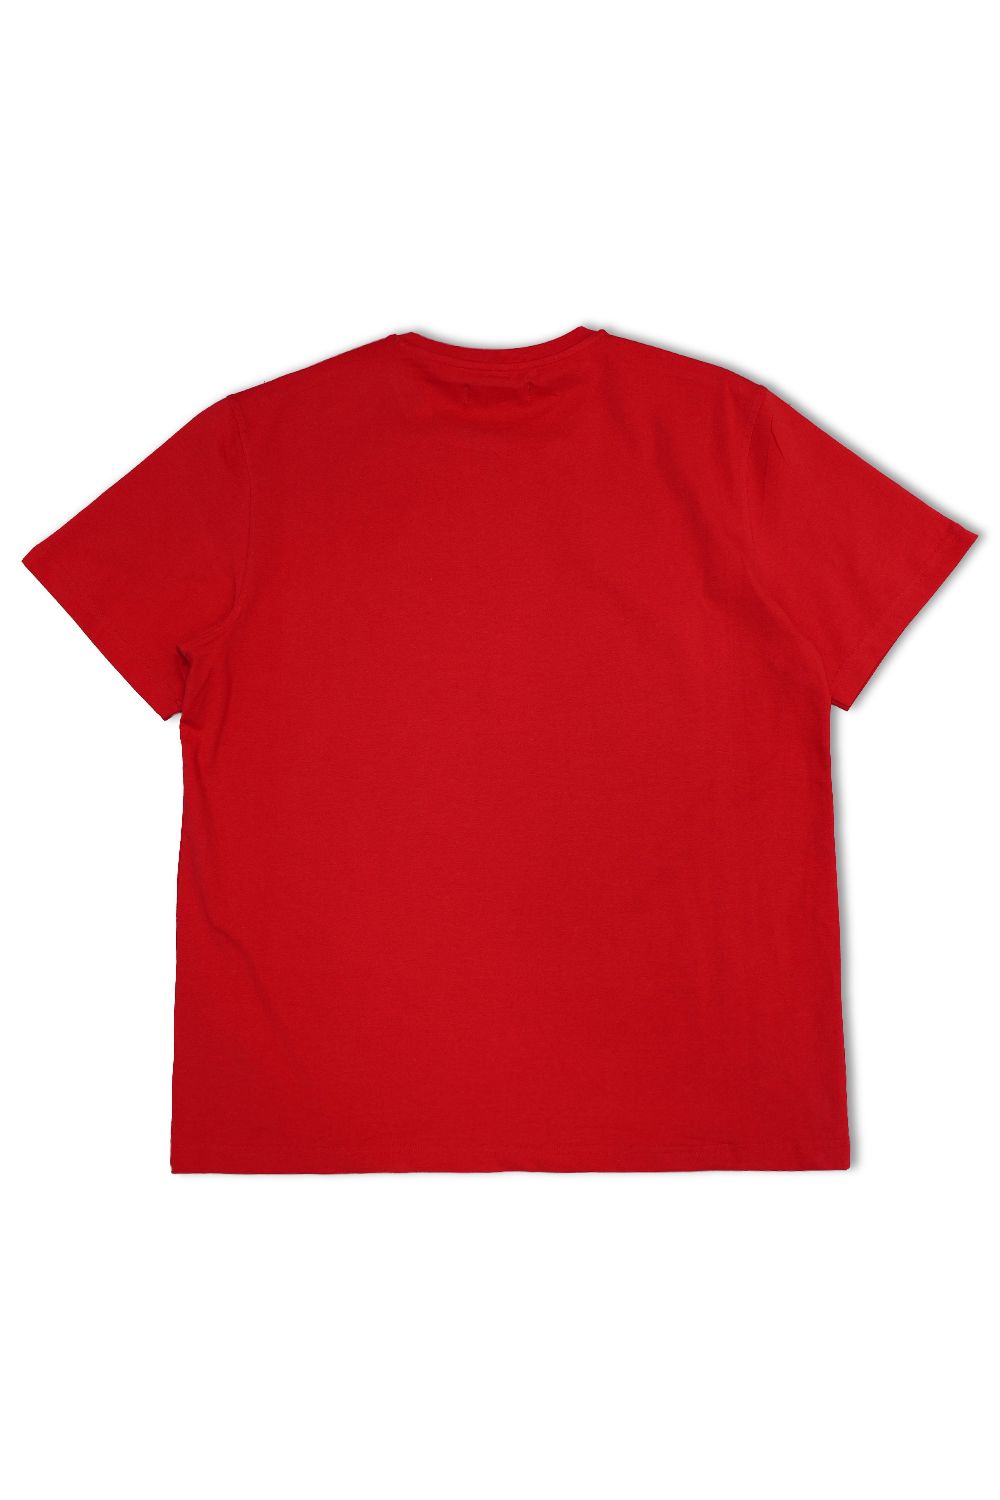 Roku Studio -Star T - Shirt -Red